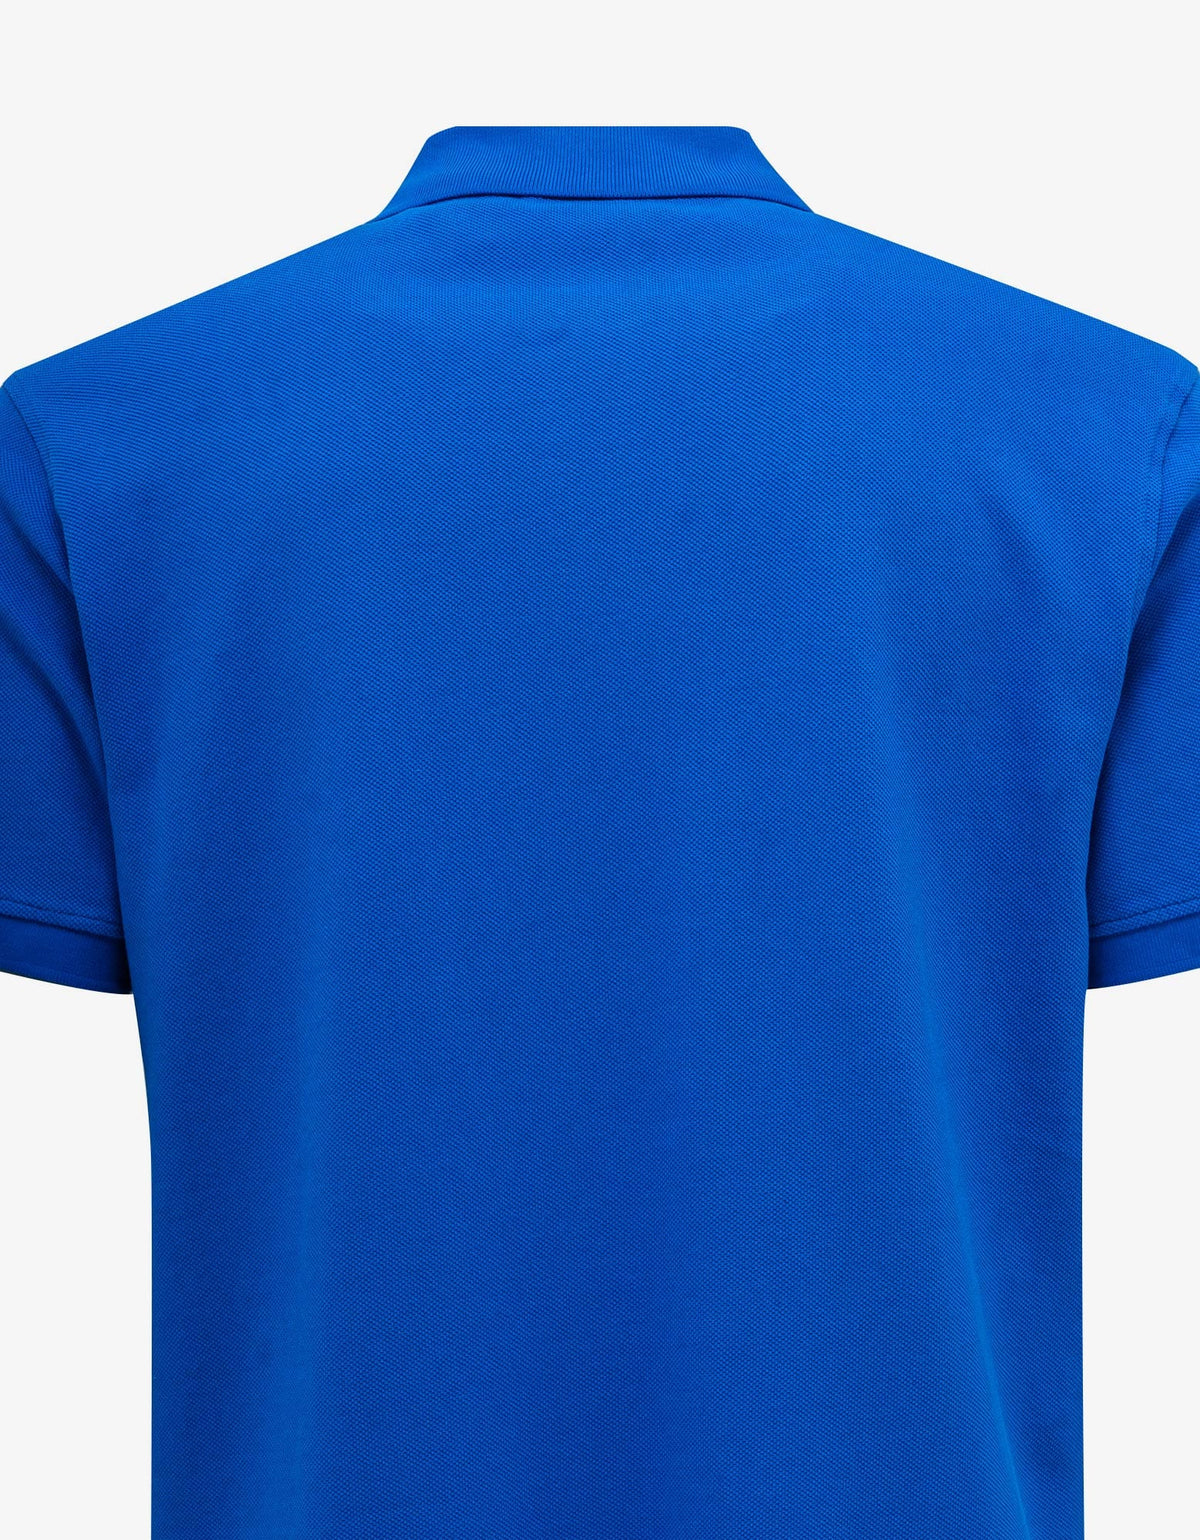 Kenzo Blue 'Boke Flower' Crest Polo T-Shirt